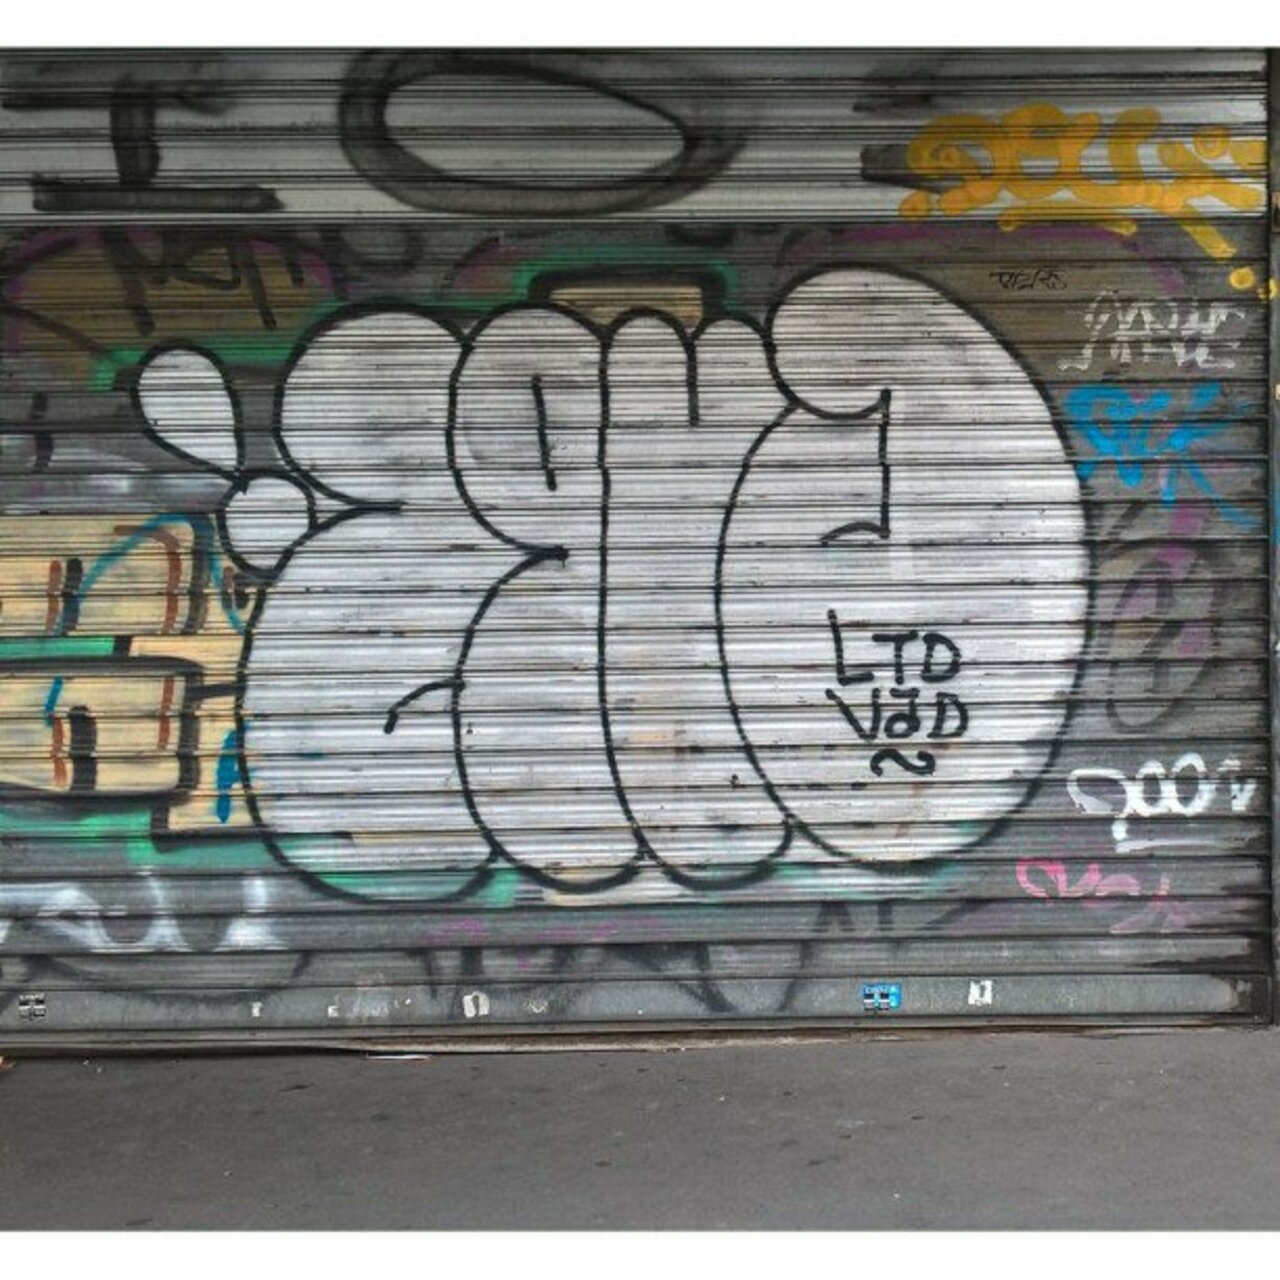 #Paris #graffiti photo by @maxdimontemarciano http://ift.tt/1MX8JwG #StreetArt https://t.co/PPzpLcrhog